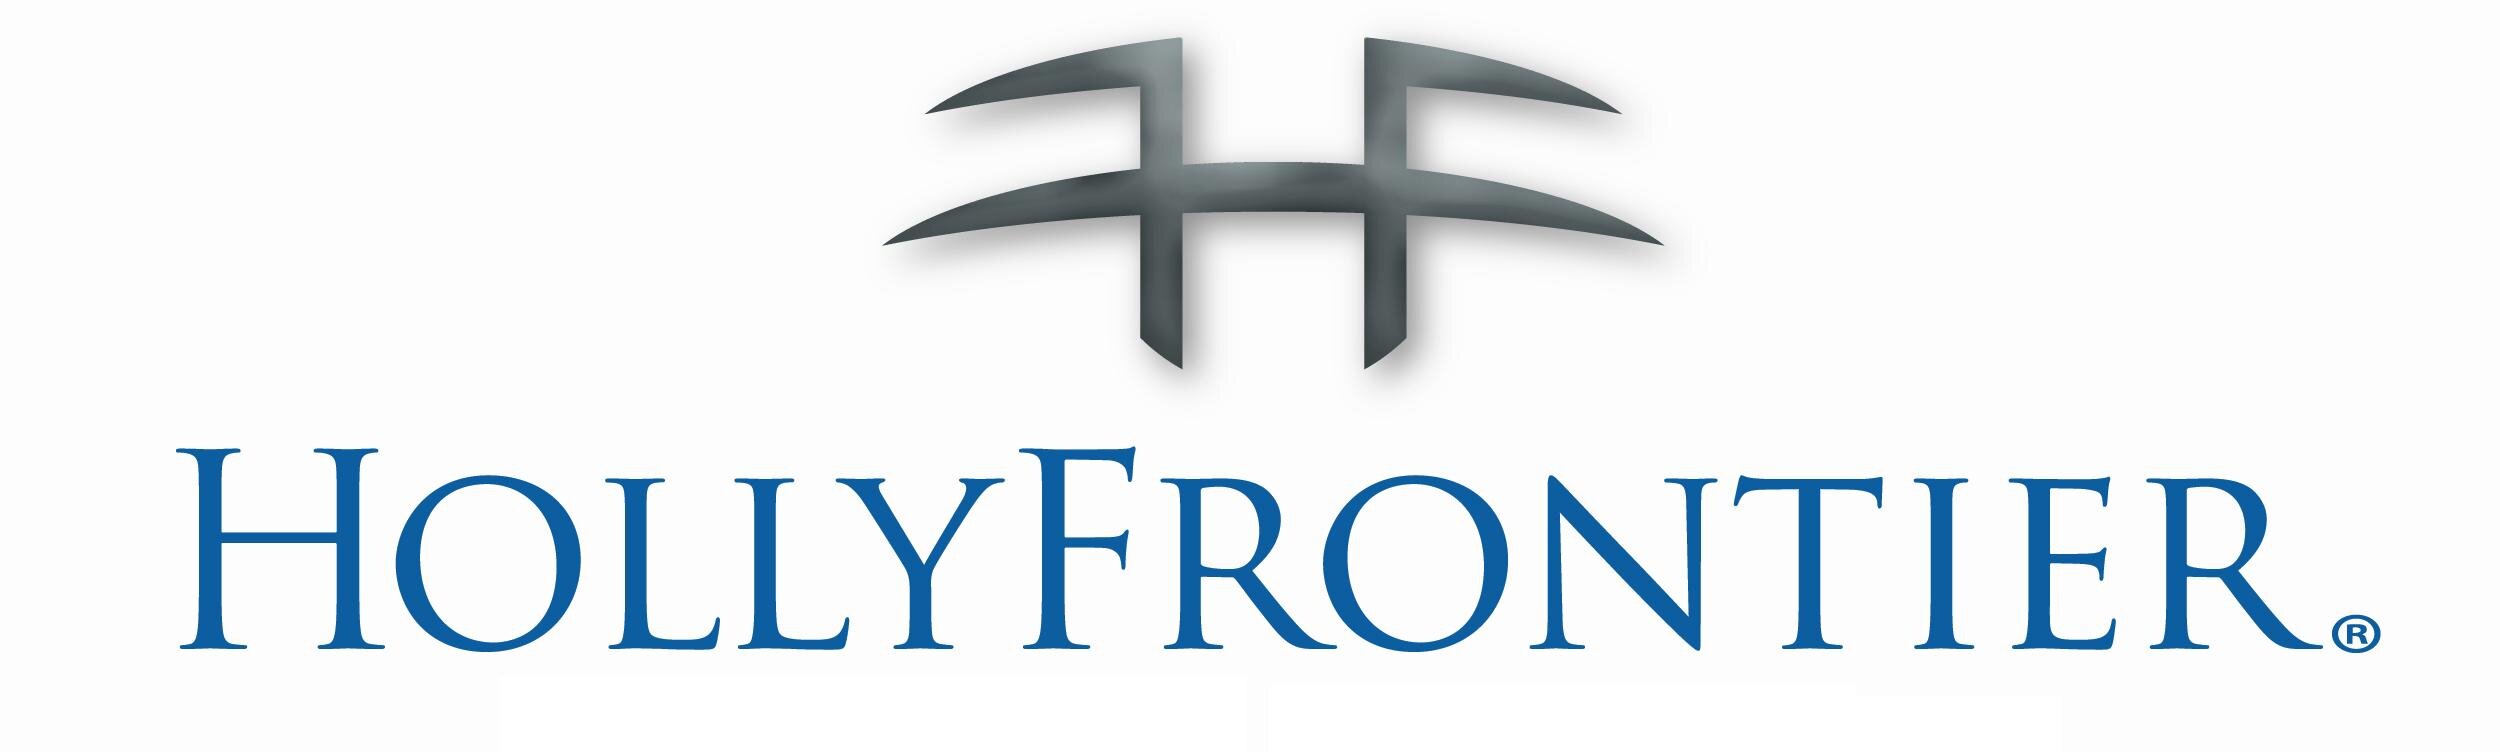 HollyFrontier-Logo.jpg